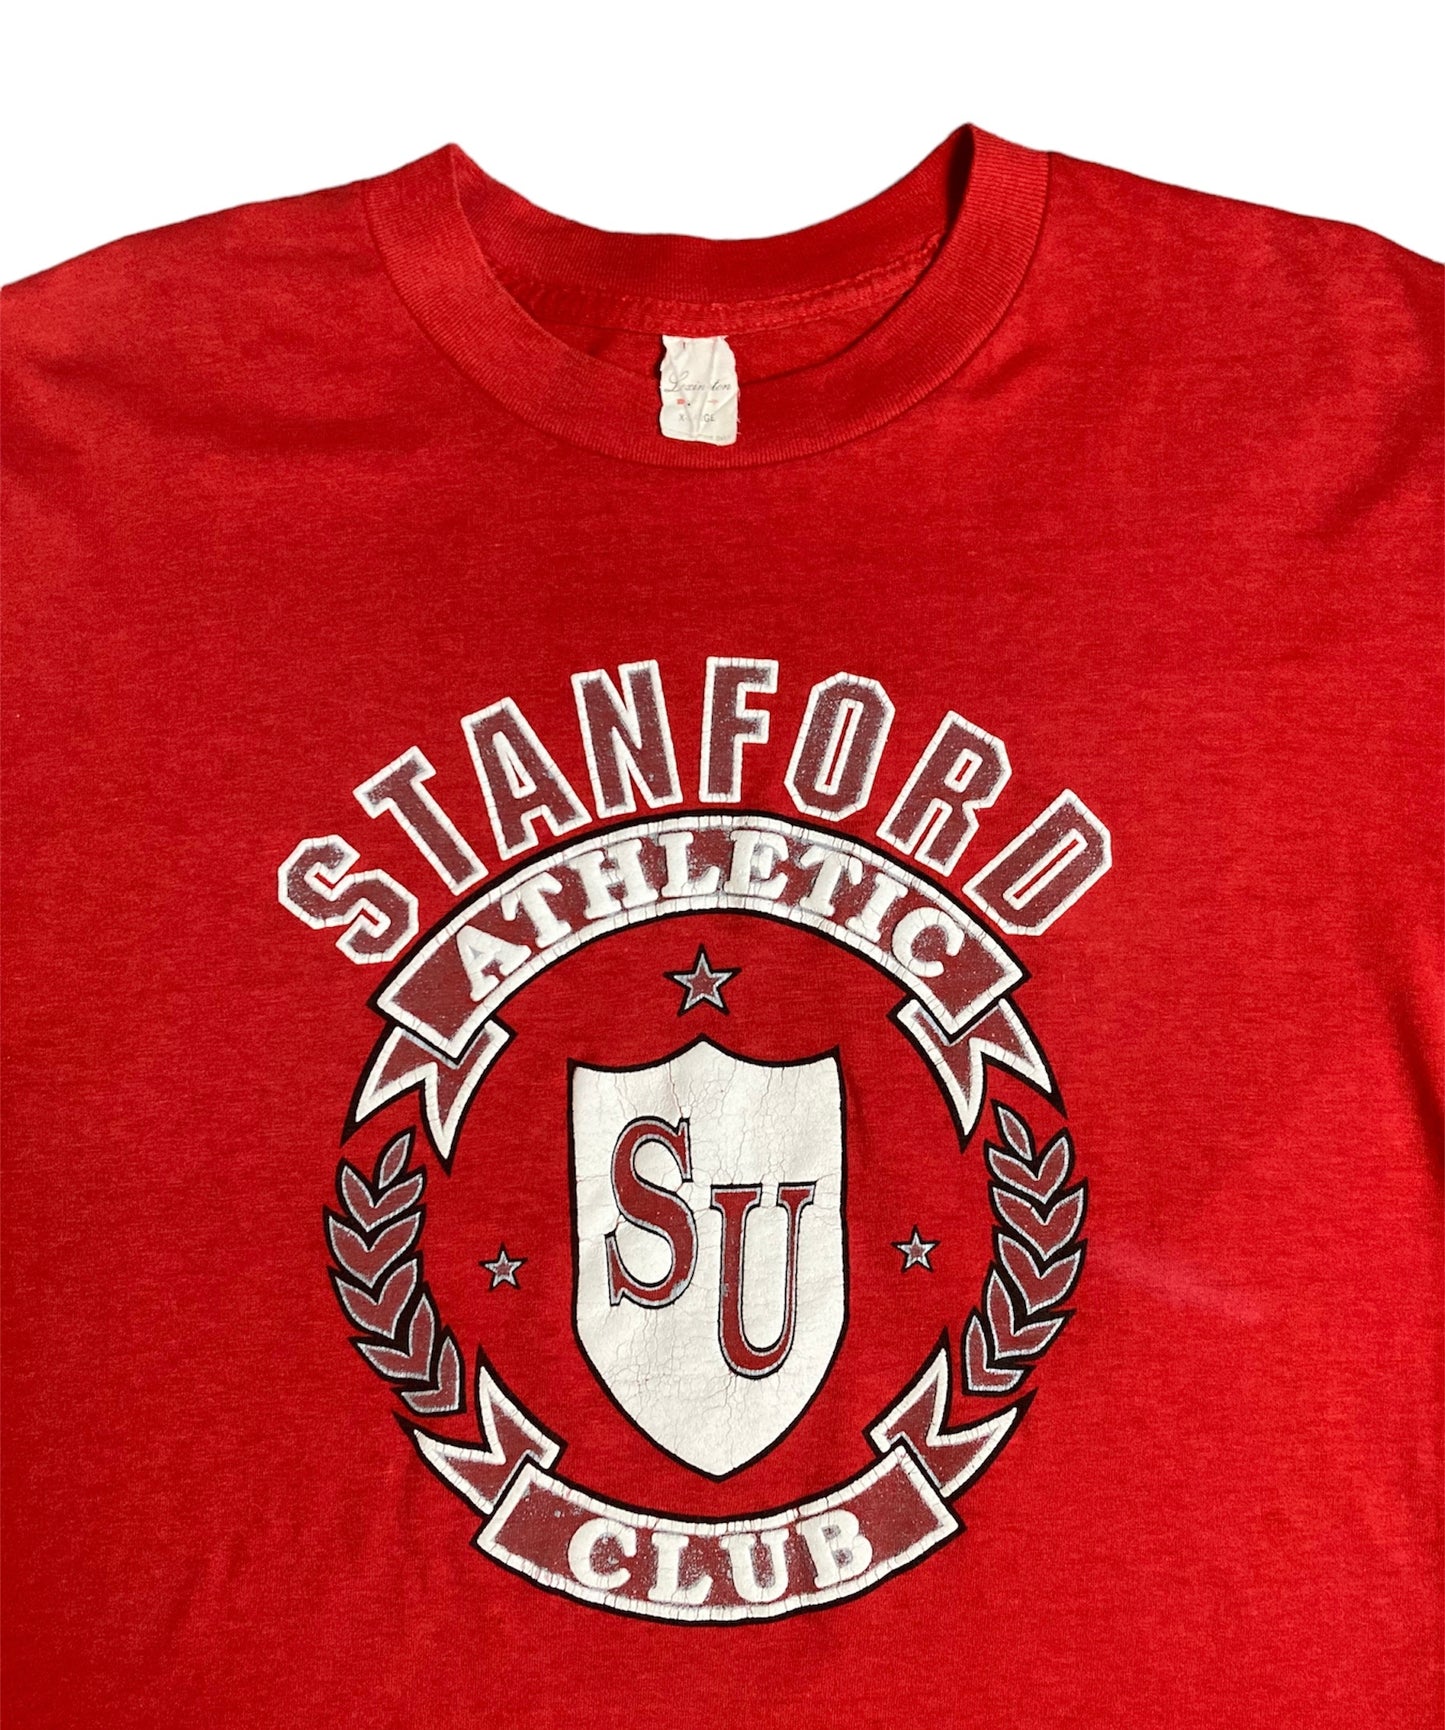 Vintage Stanford T Shirt